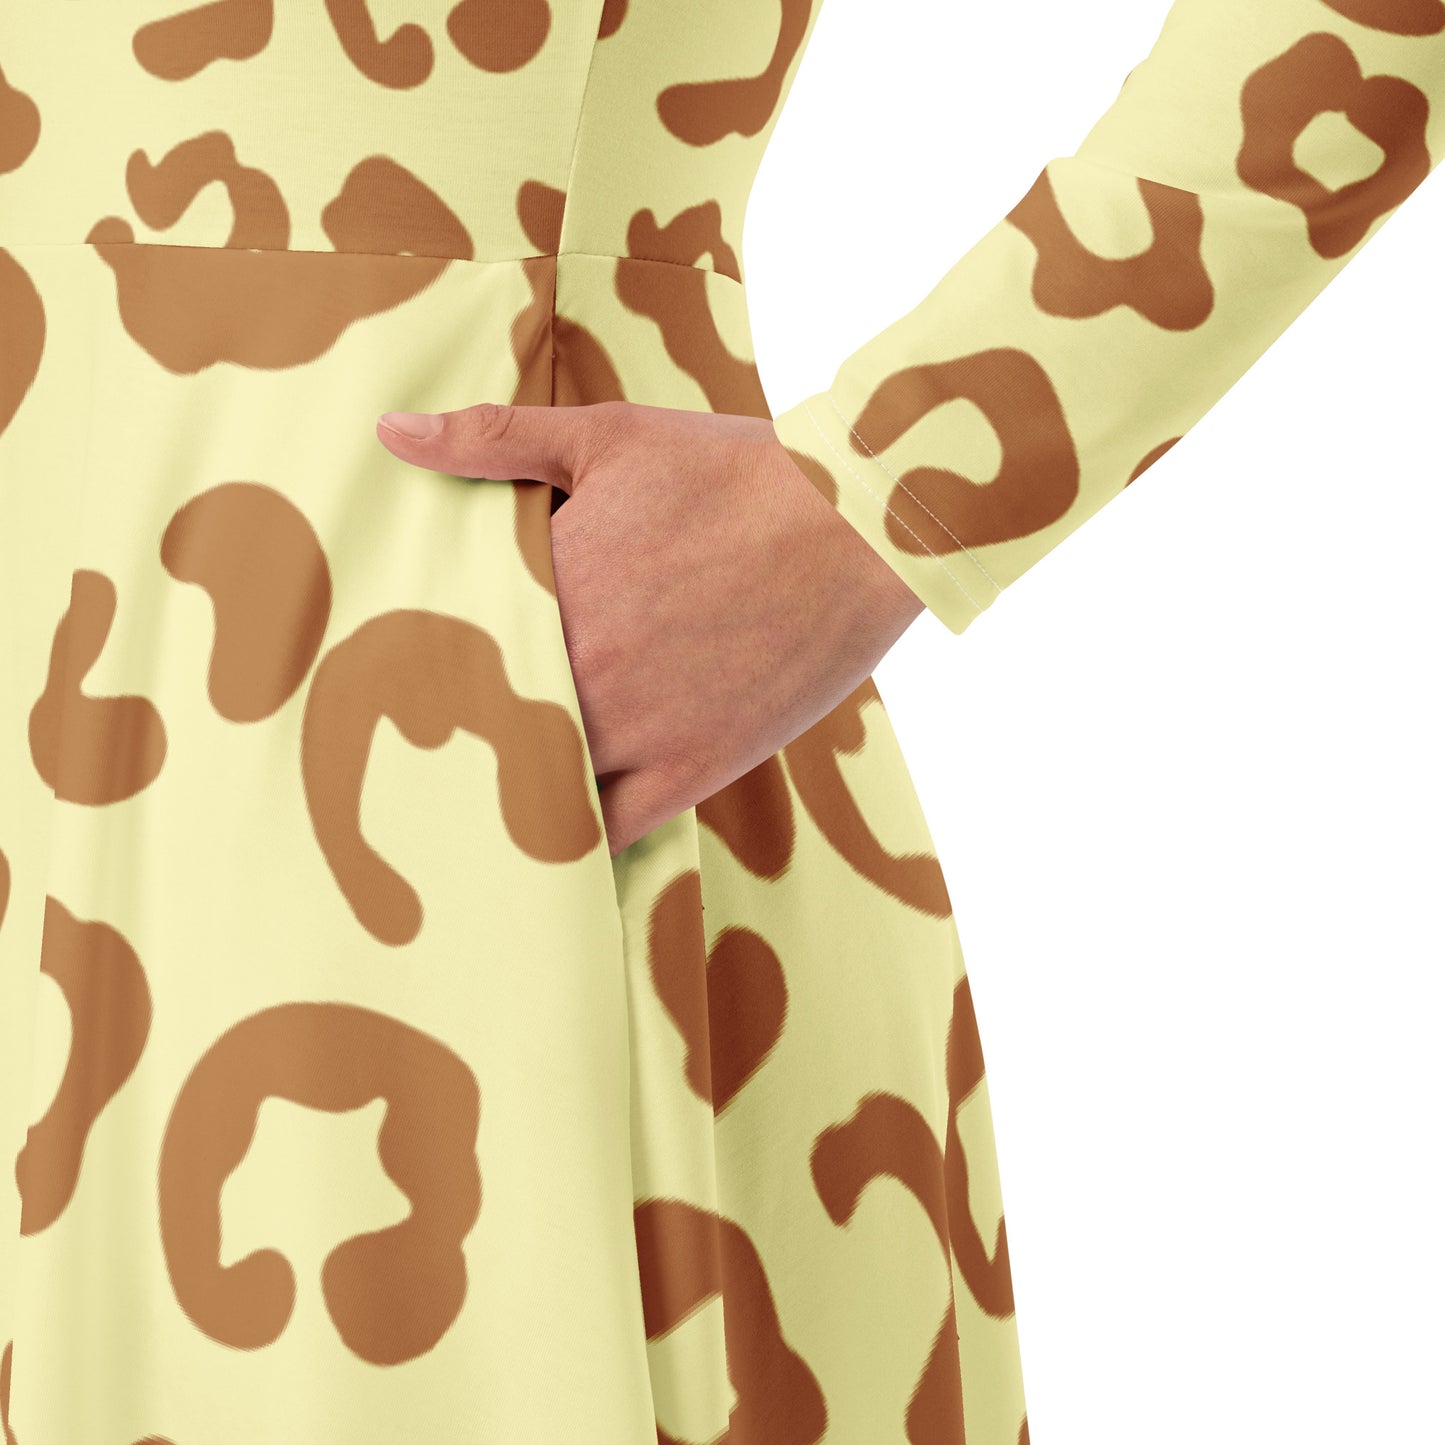 Creamy Cheetah print long sleeve midi dress - DMD Bags